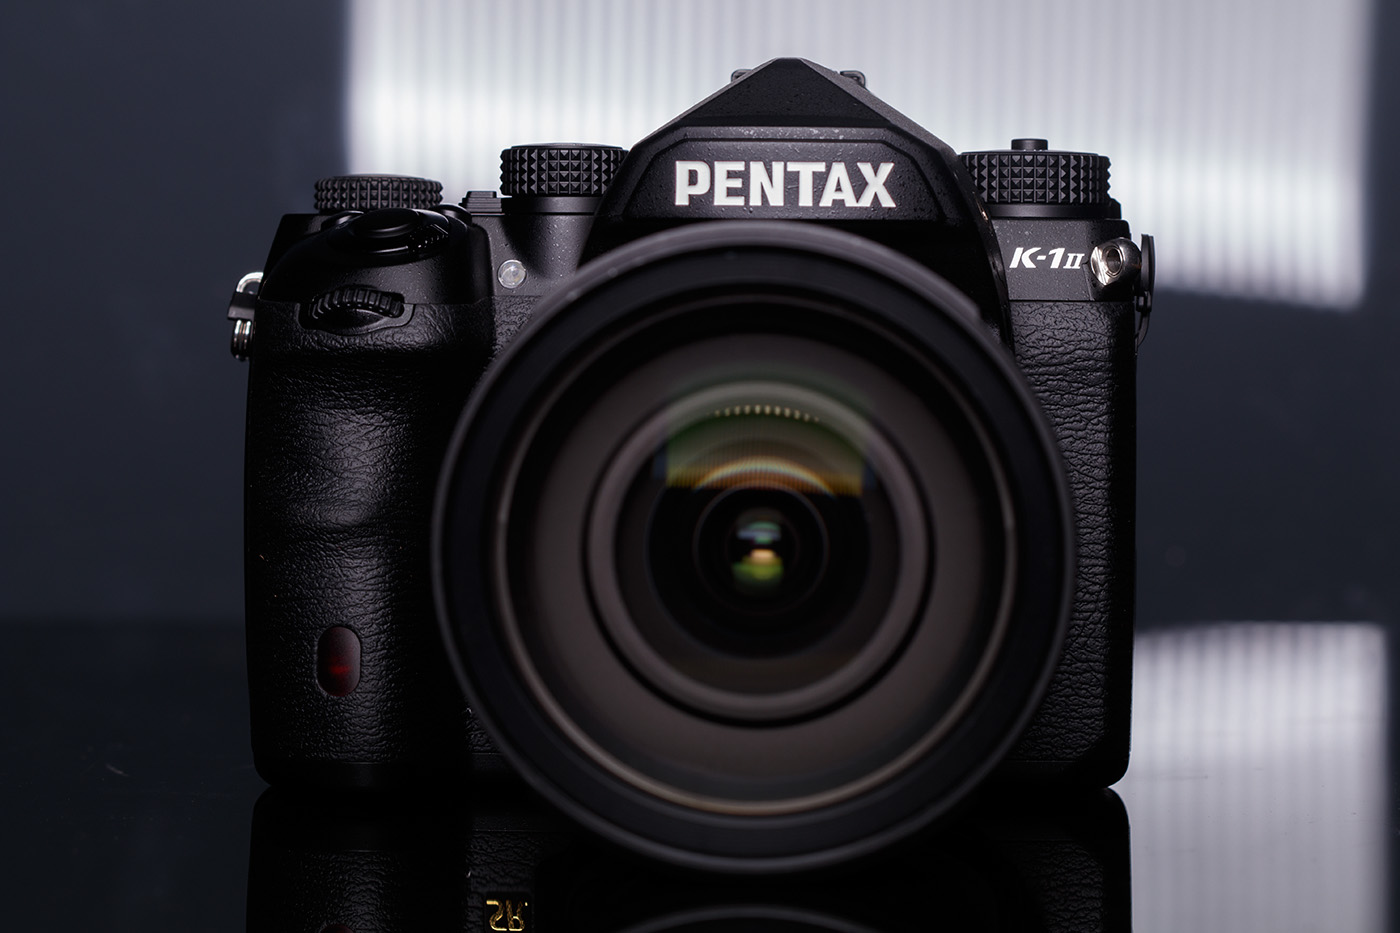 Pentax K-1 Mark II vs Pentax K-1, Canon EOS R, Nikon D810, Nikon D850 and Sony A7R III : Image Quality Comparison